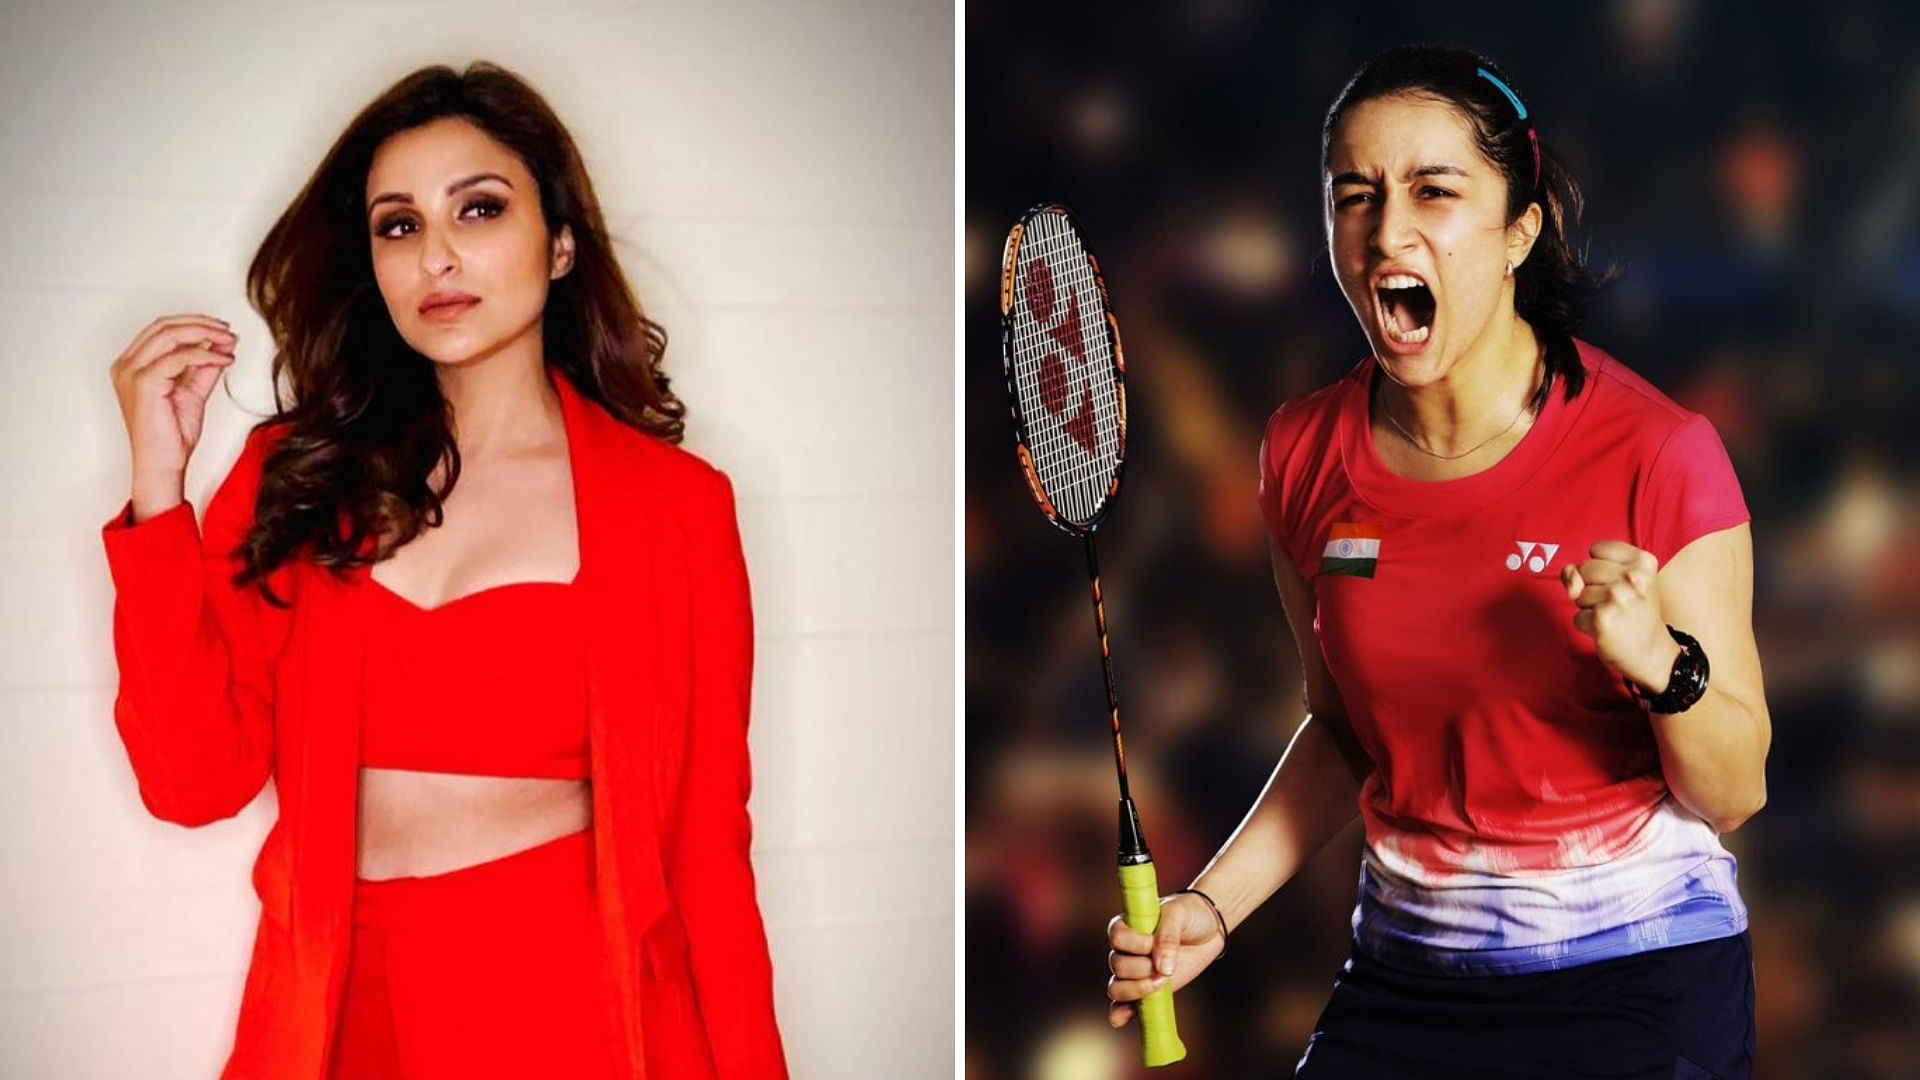 Parineeti Chopra will replace Shraddha Kapoor as Saina Nehwal in the upcoming biopic on the badminton champion.